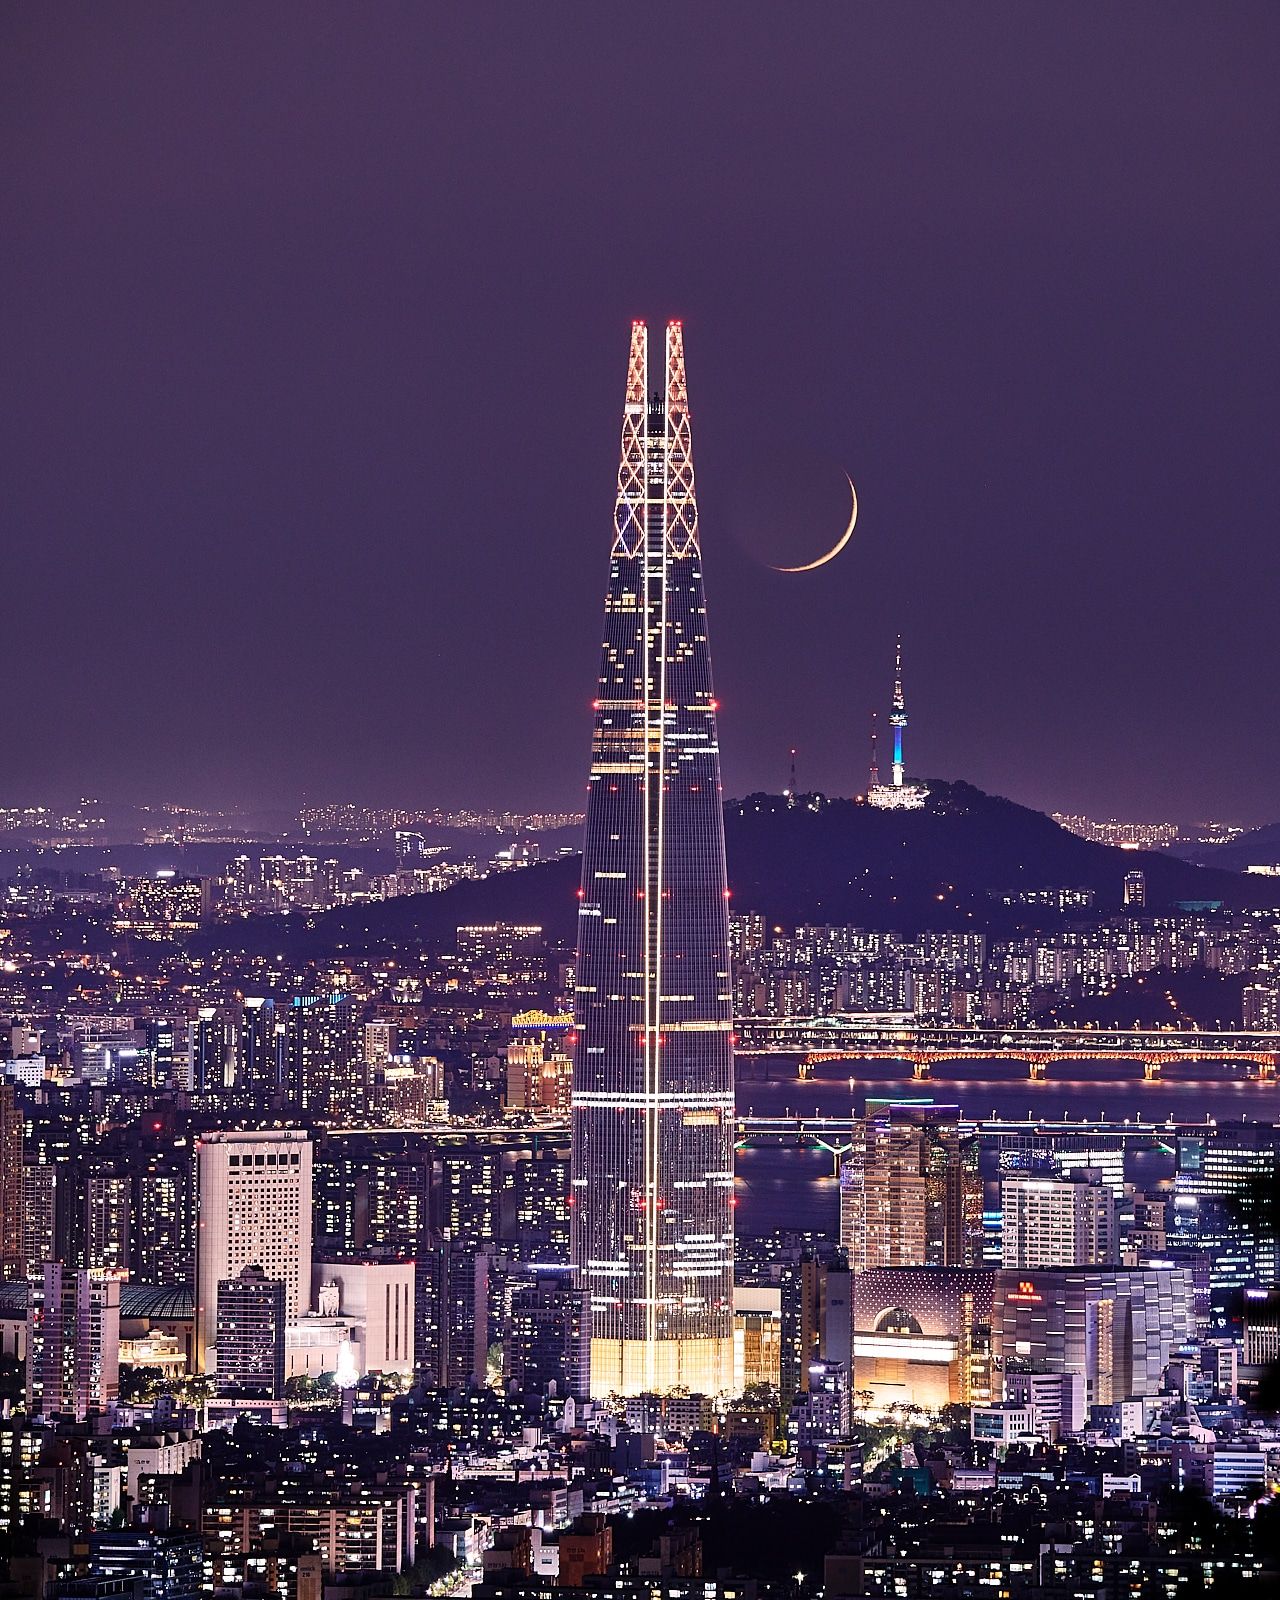 Lotte World Tower (Seoul), kinda evil, whoa